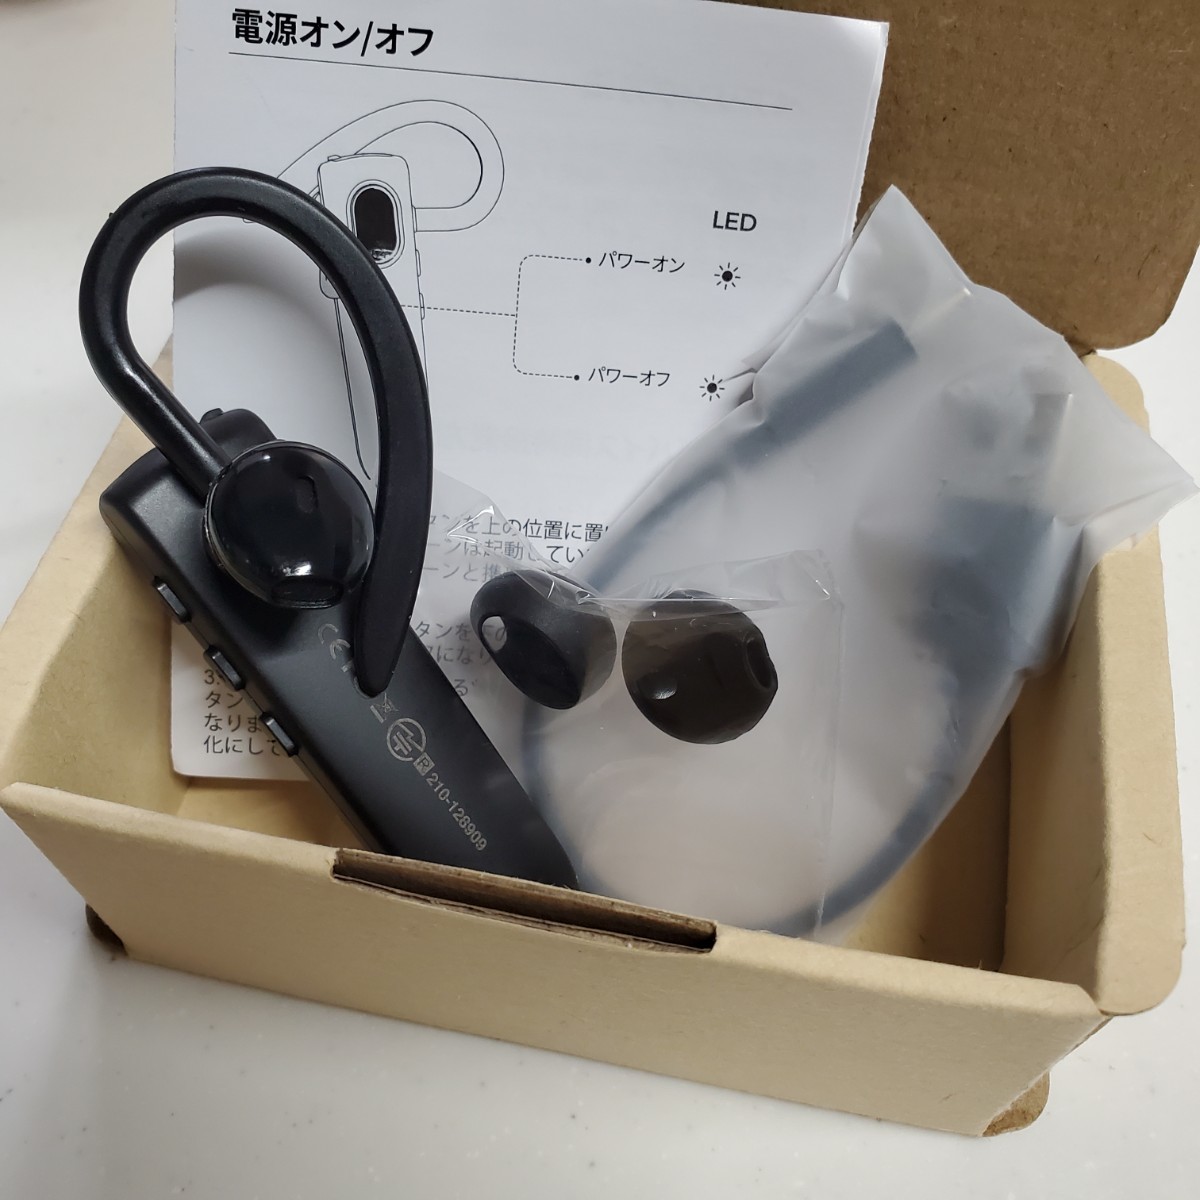 Bluetooth ヘッドセット 5.0 日本語音声 ワイヤレス イヤホン 片耳 マイク内蔵 ハンズフリー通話 片耳